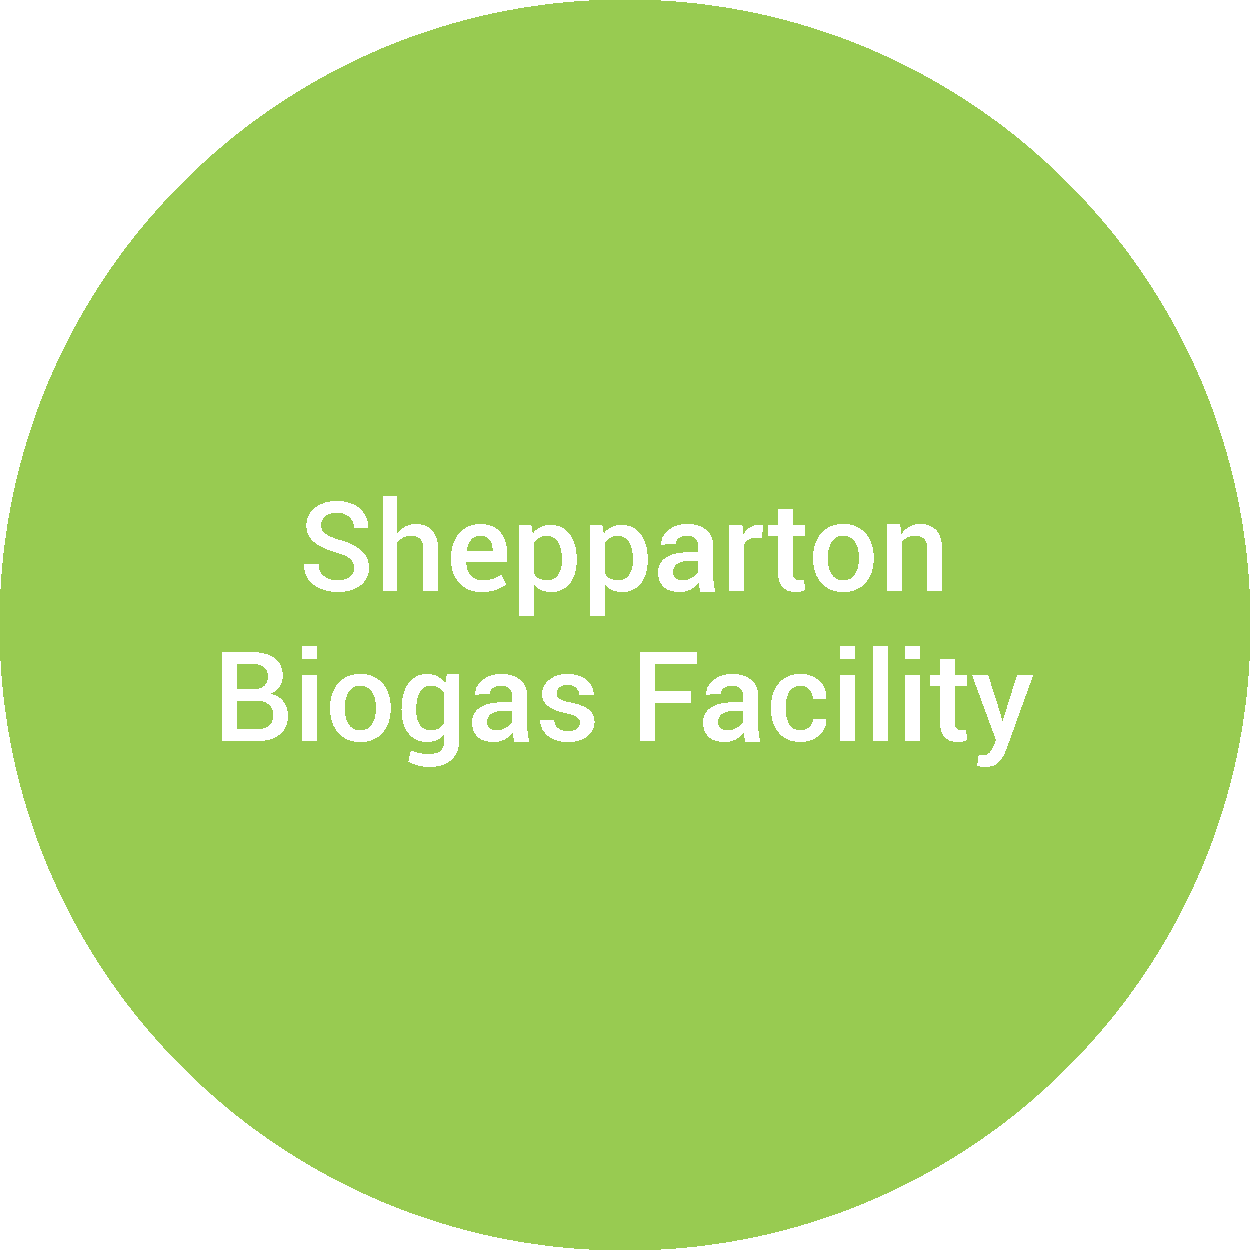 Shepparton Biogas Facility